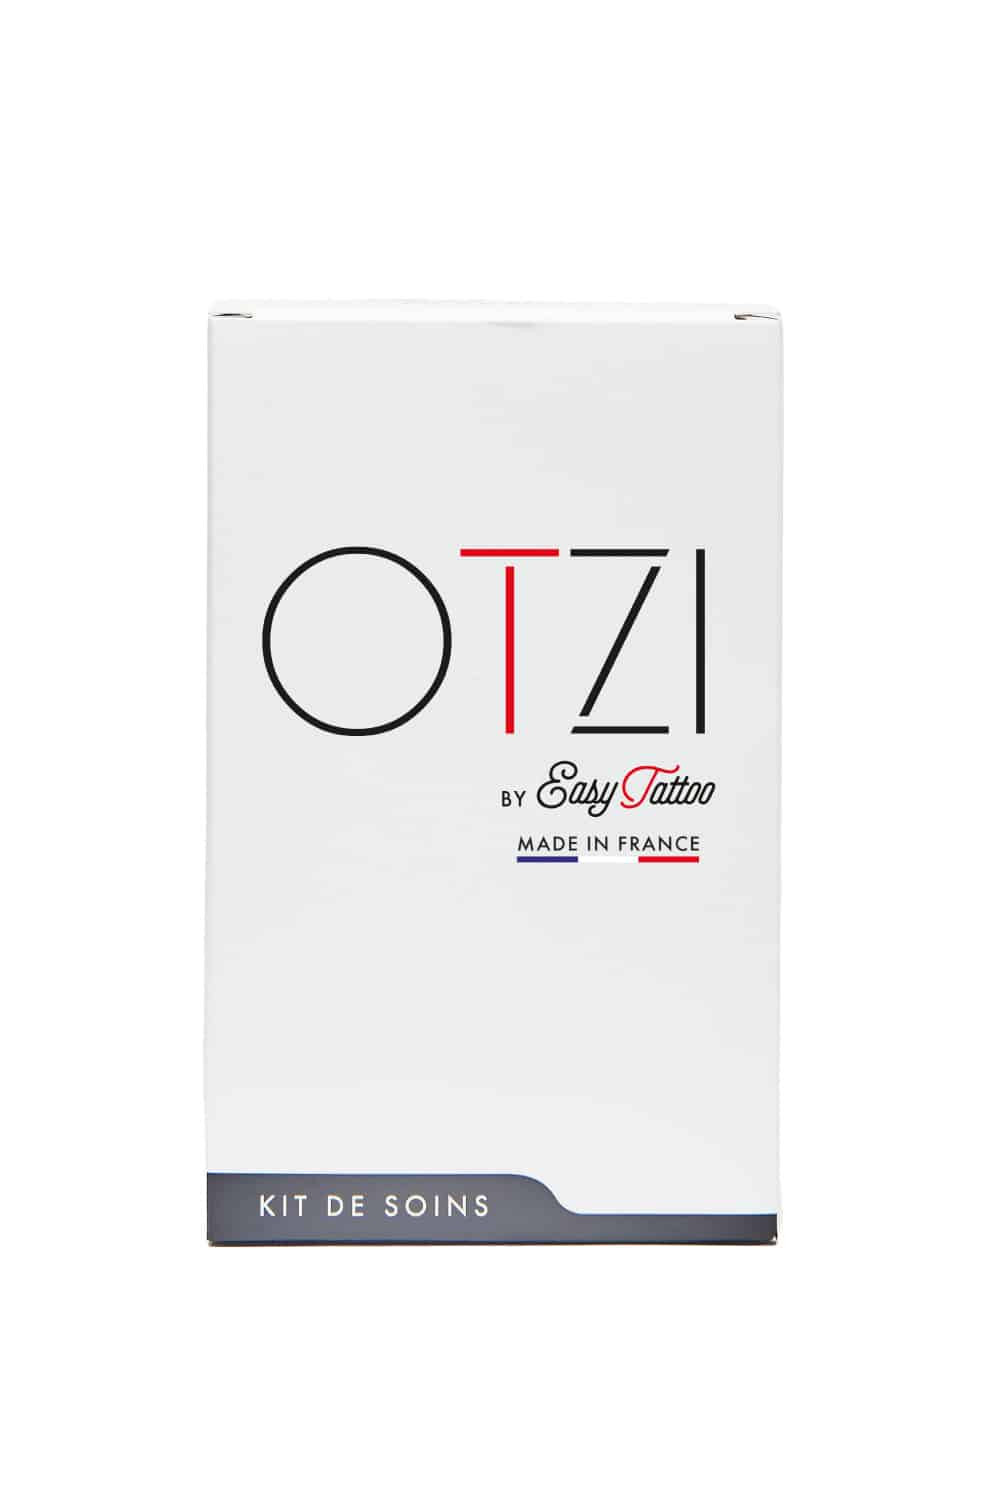 Otzi by Easytattoo Care Kit